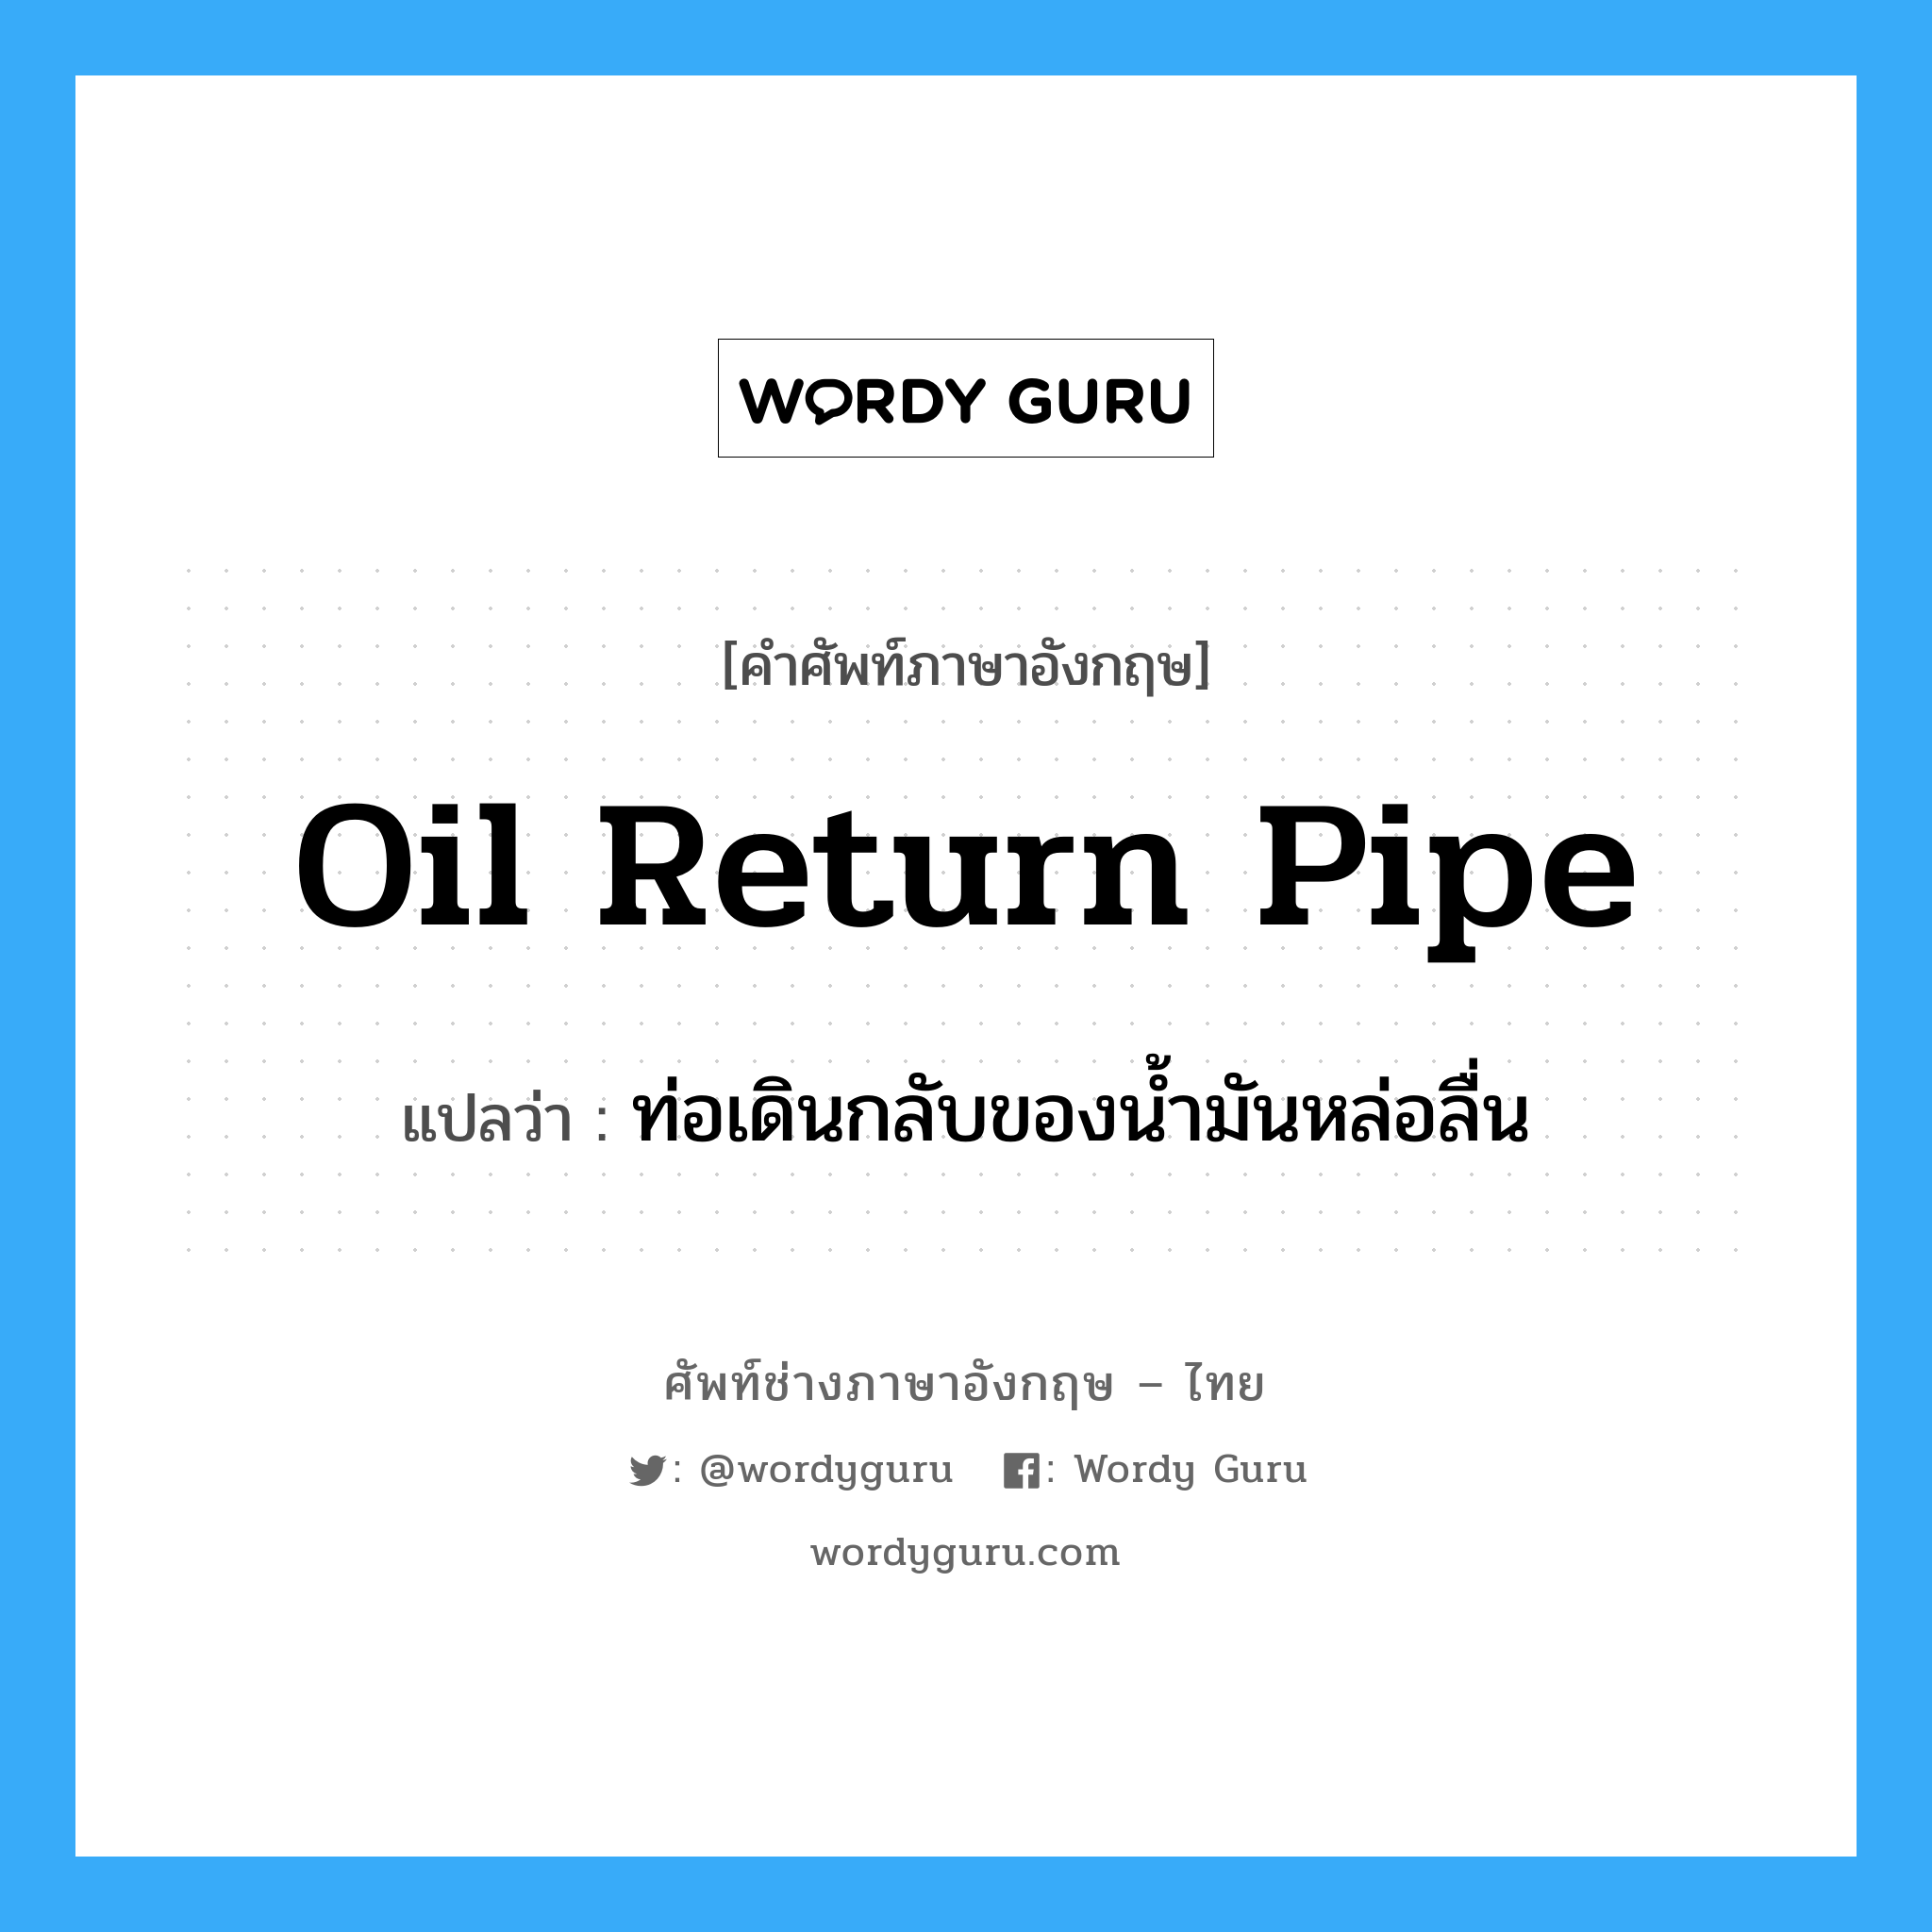 oil return pipe แปลว่า?, คำศัพท์ช่างภาษาอังกฤษ - ไทย oil return pipe คำศัพท์ภาษาอังกฤษ oil return pipe แปลว่า ท่อเดินกลับของน้ำมันหล่อลื่น